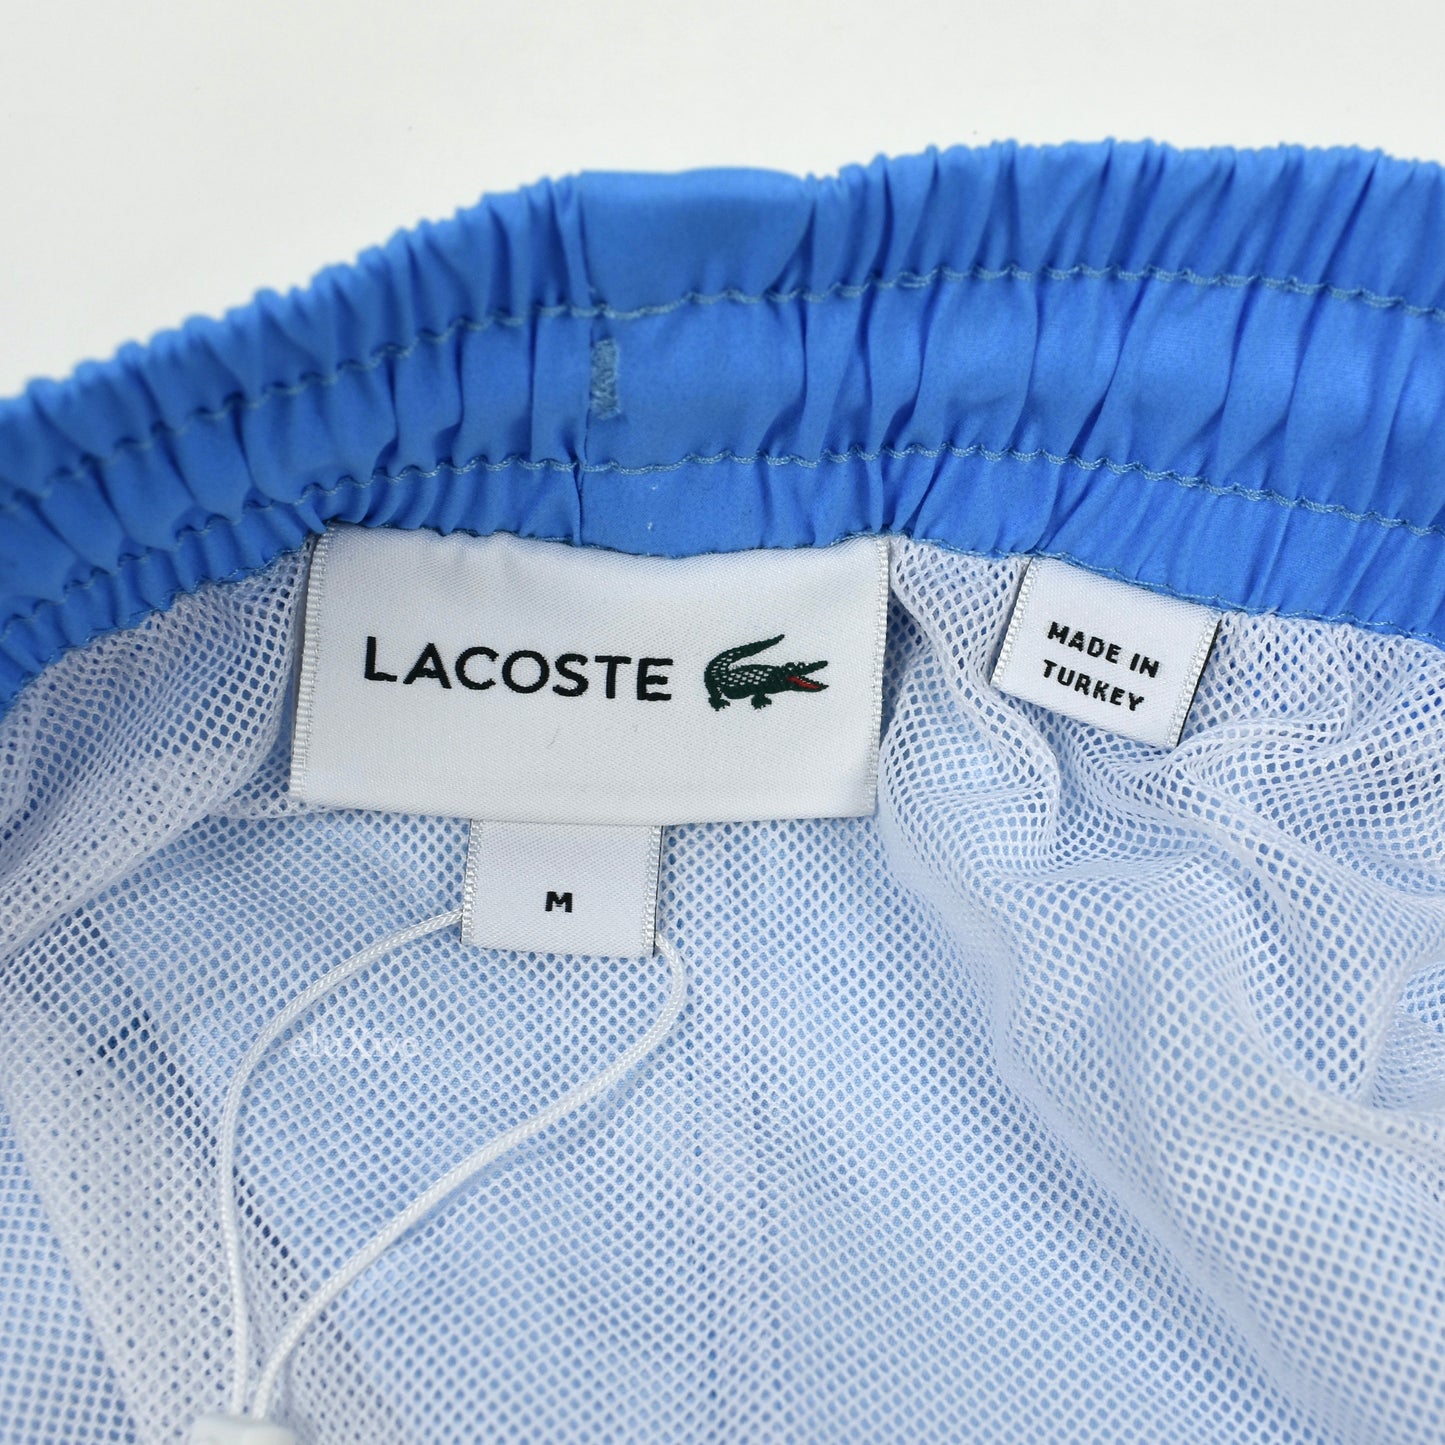 Lacoste - Mountain Print Swim Trunks / Shorts